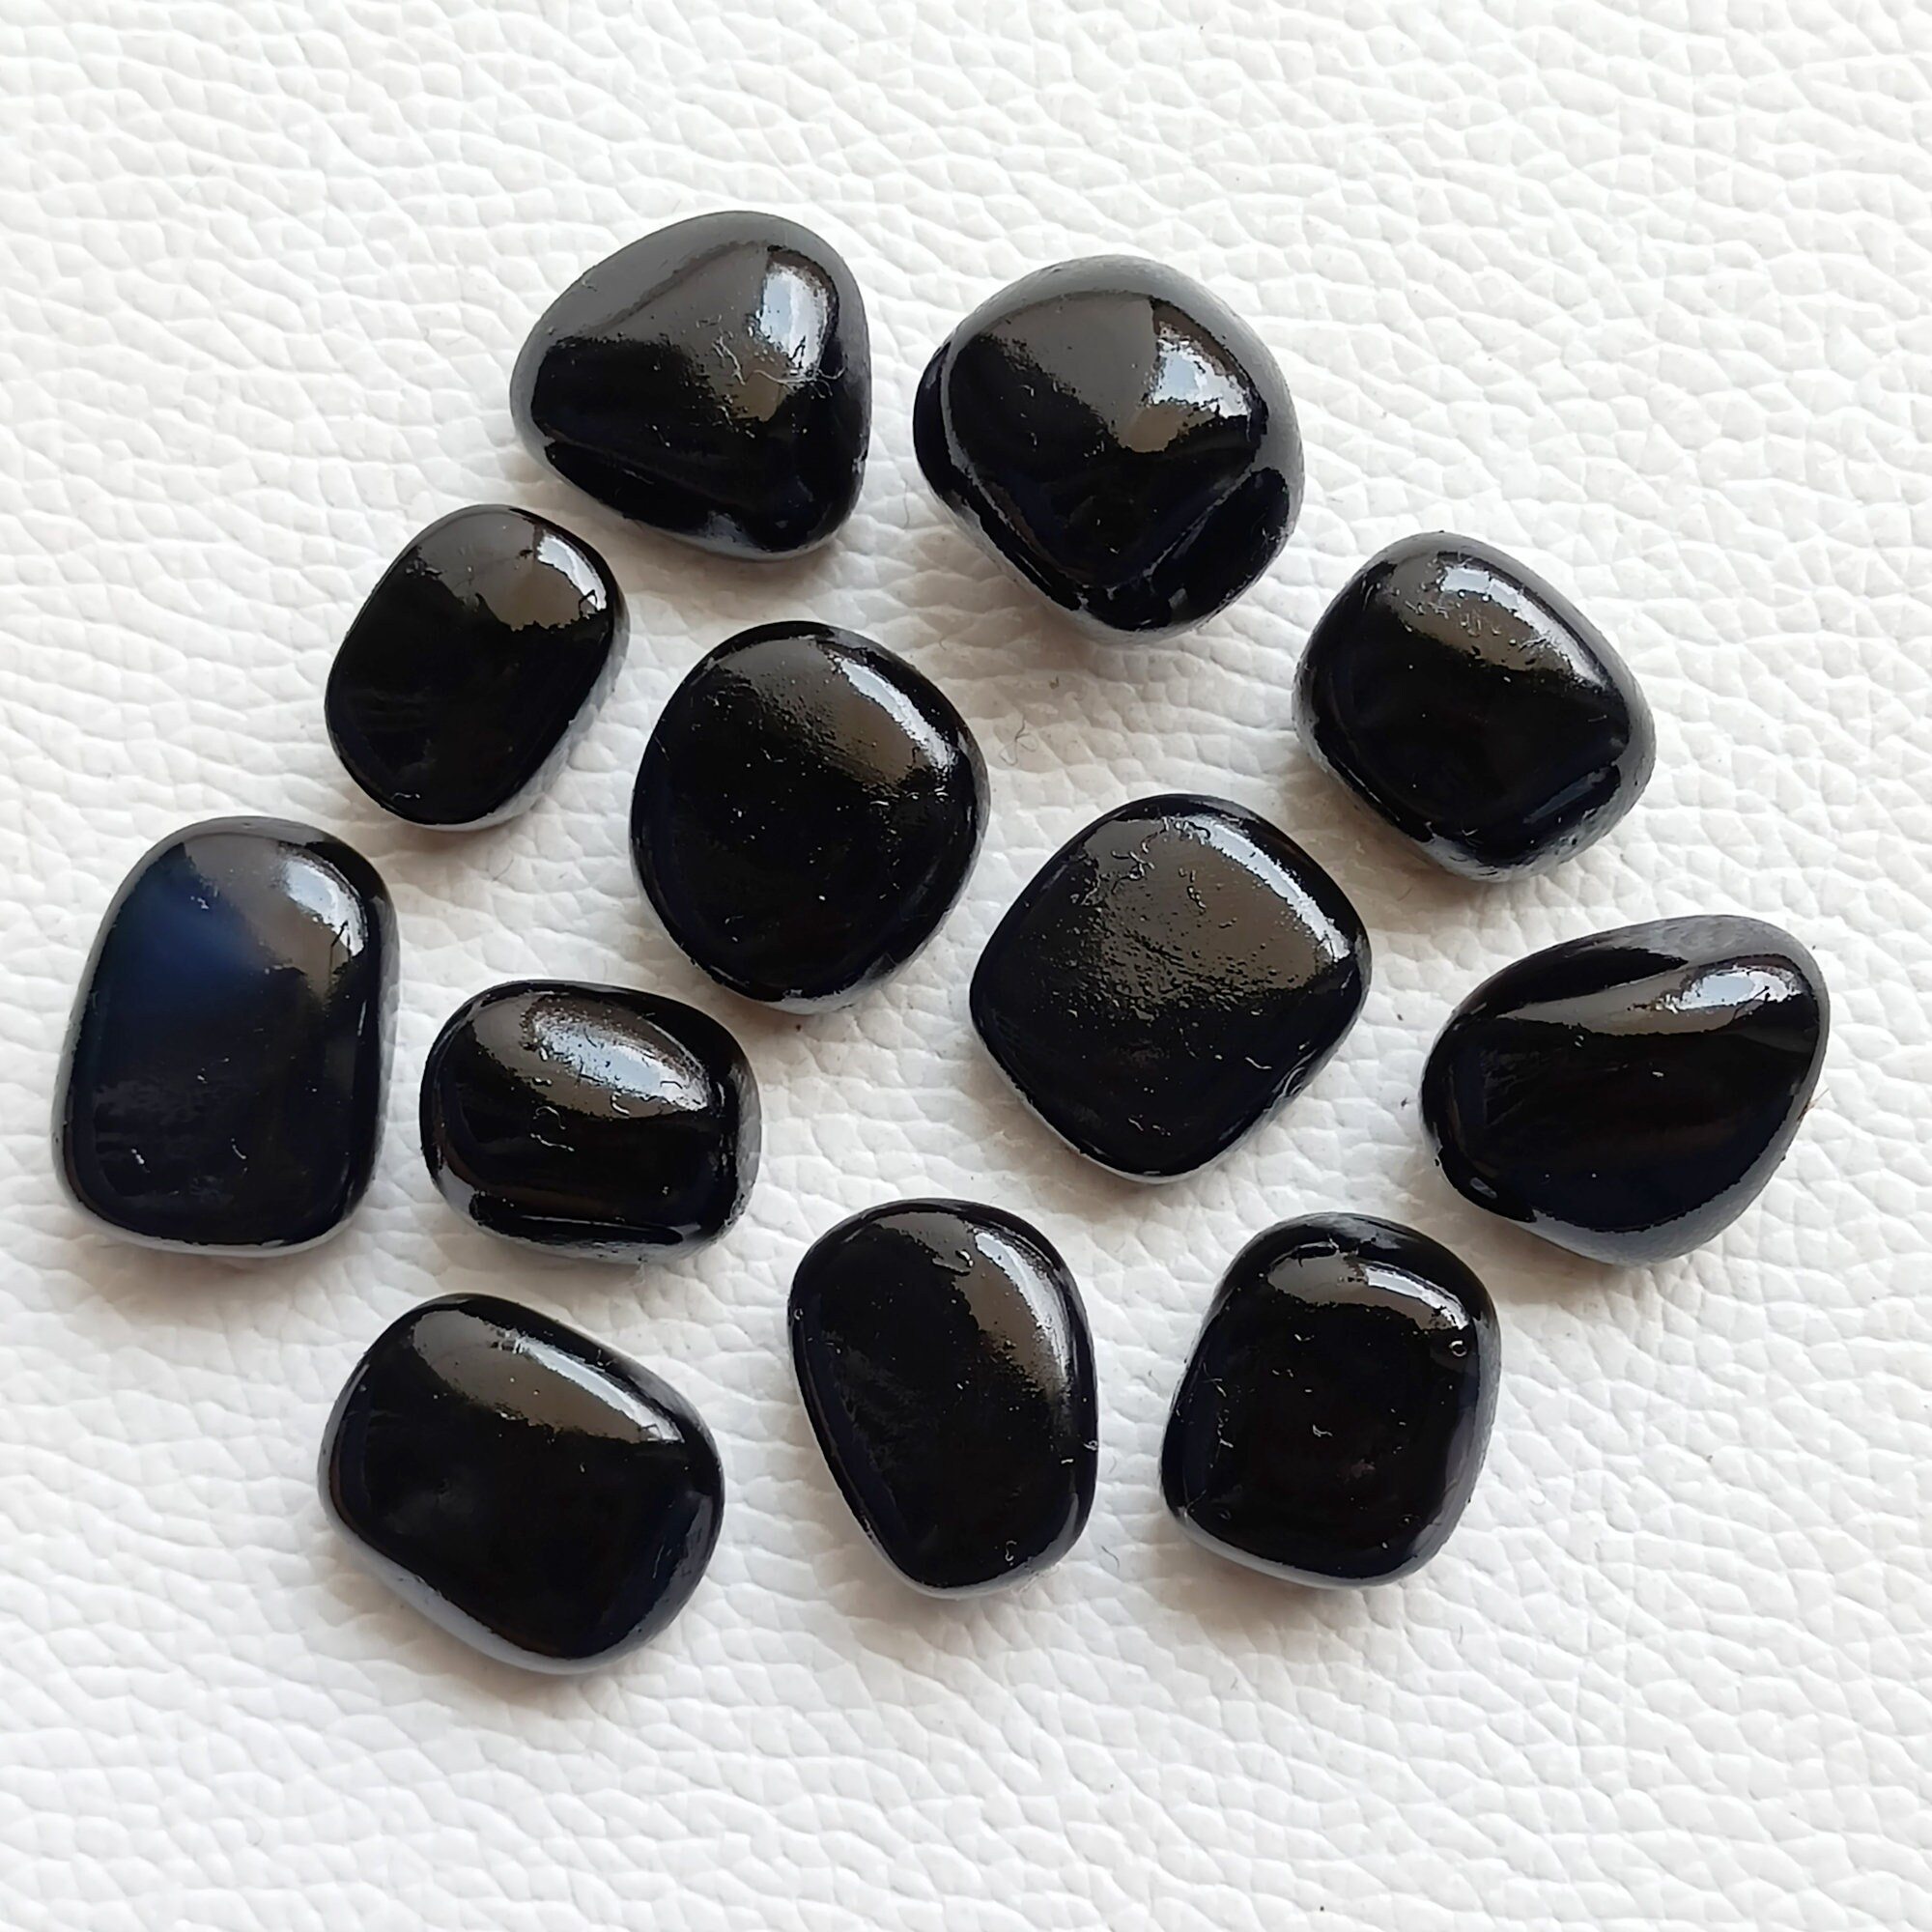 1 lb Bulk Lot Black Onyx Tumbled Stone Crystal Healing Gemstone 16 oz